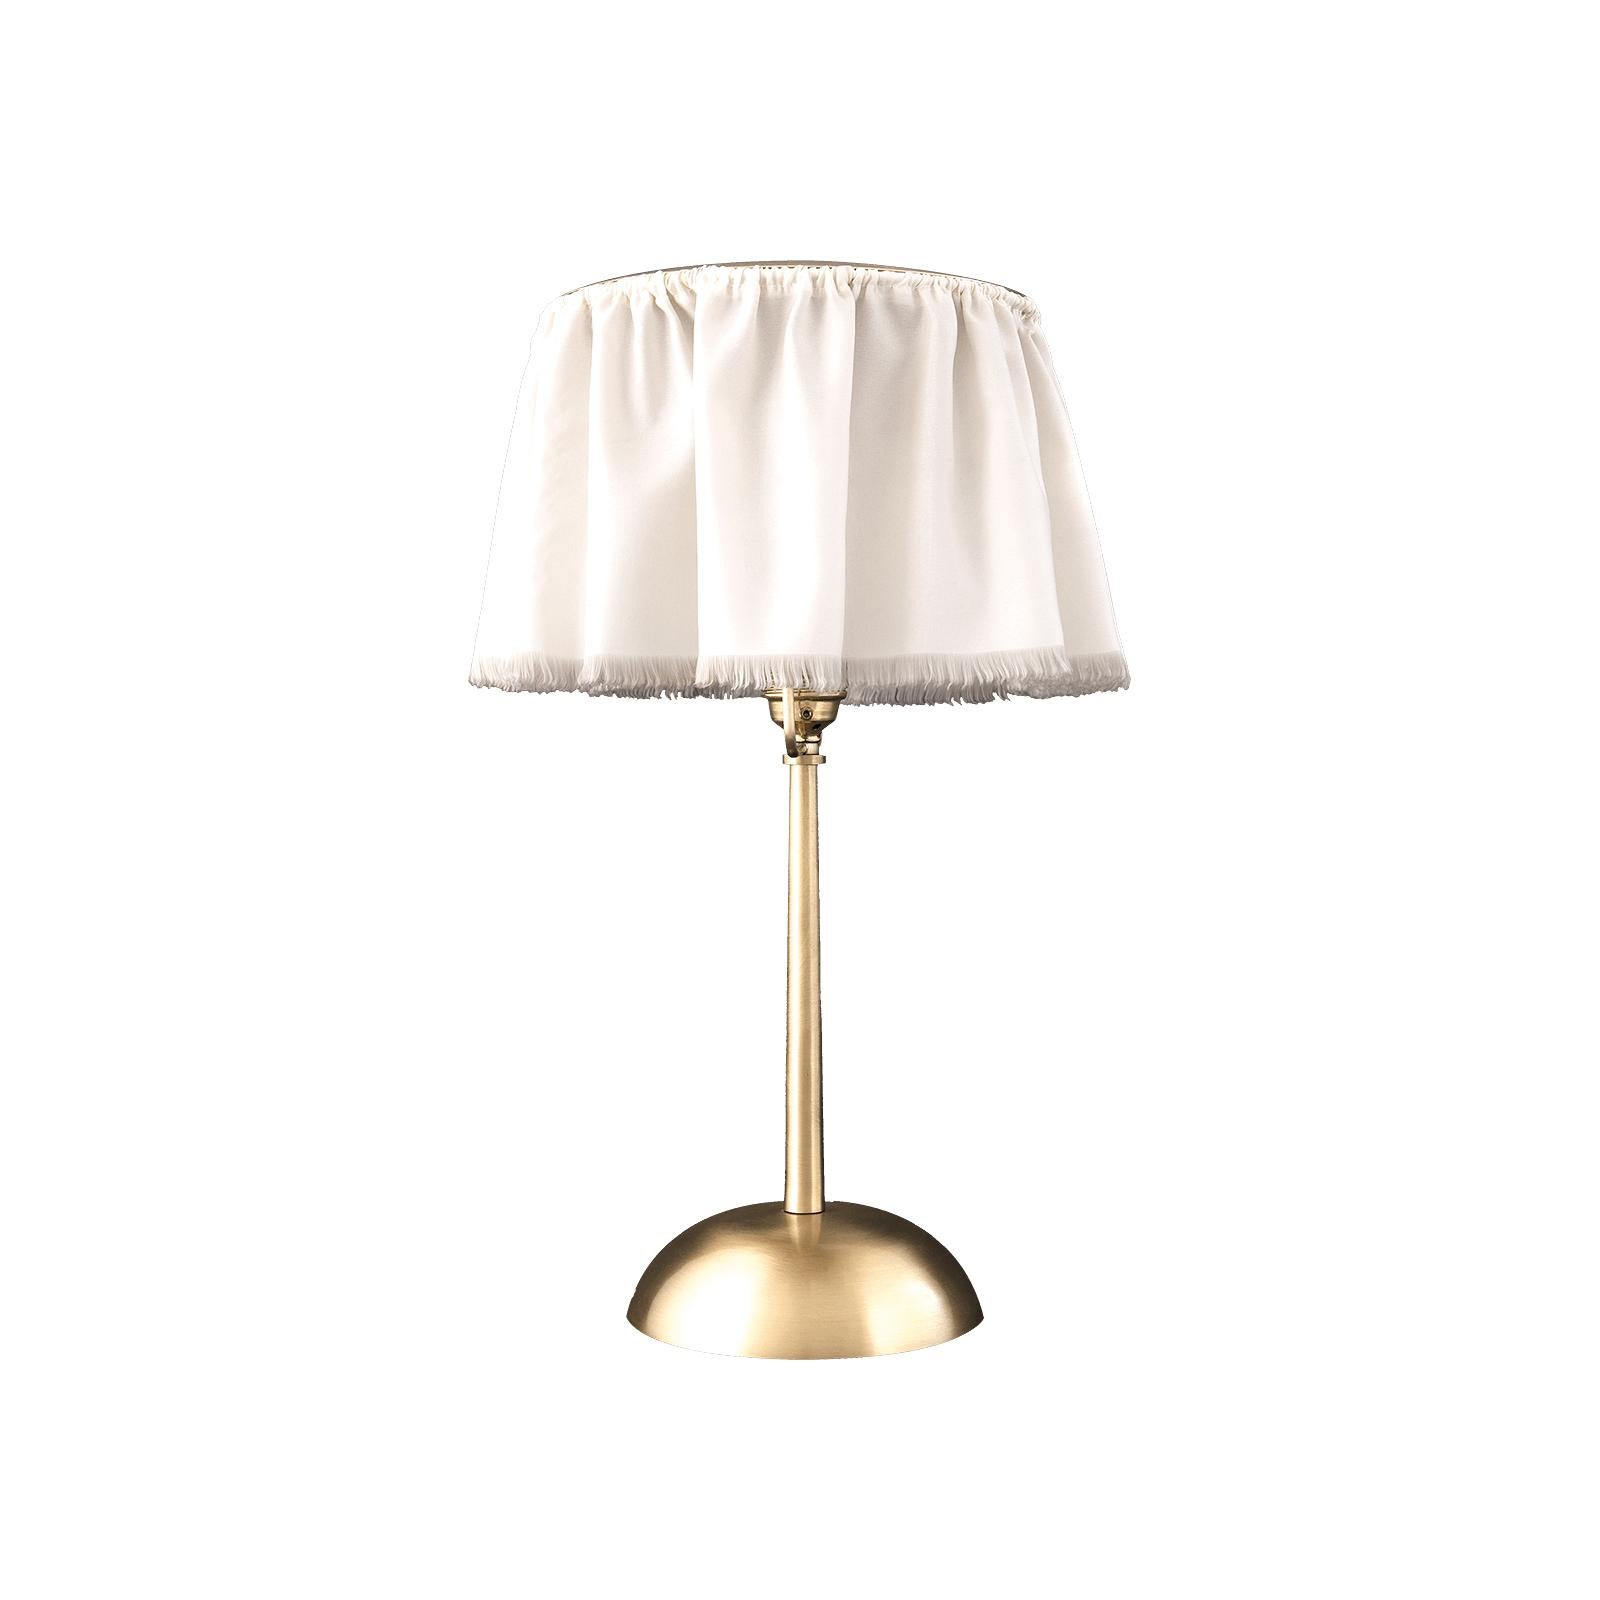 Josef Hoffmann / Wiener Werkstätte Jugendstil/ Art Nouveau Table Lamp Re-Edition For Sale 2